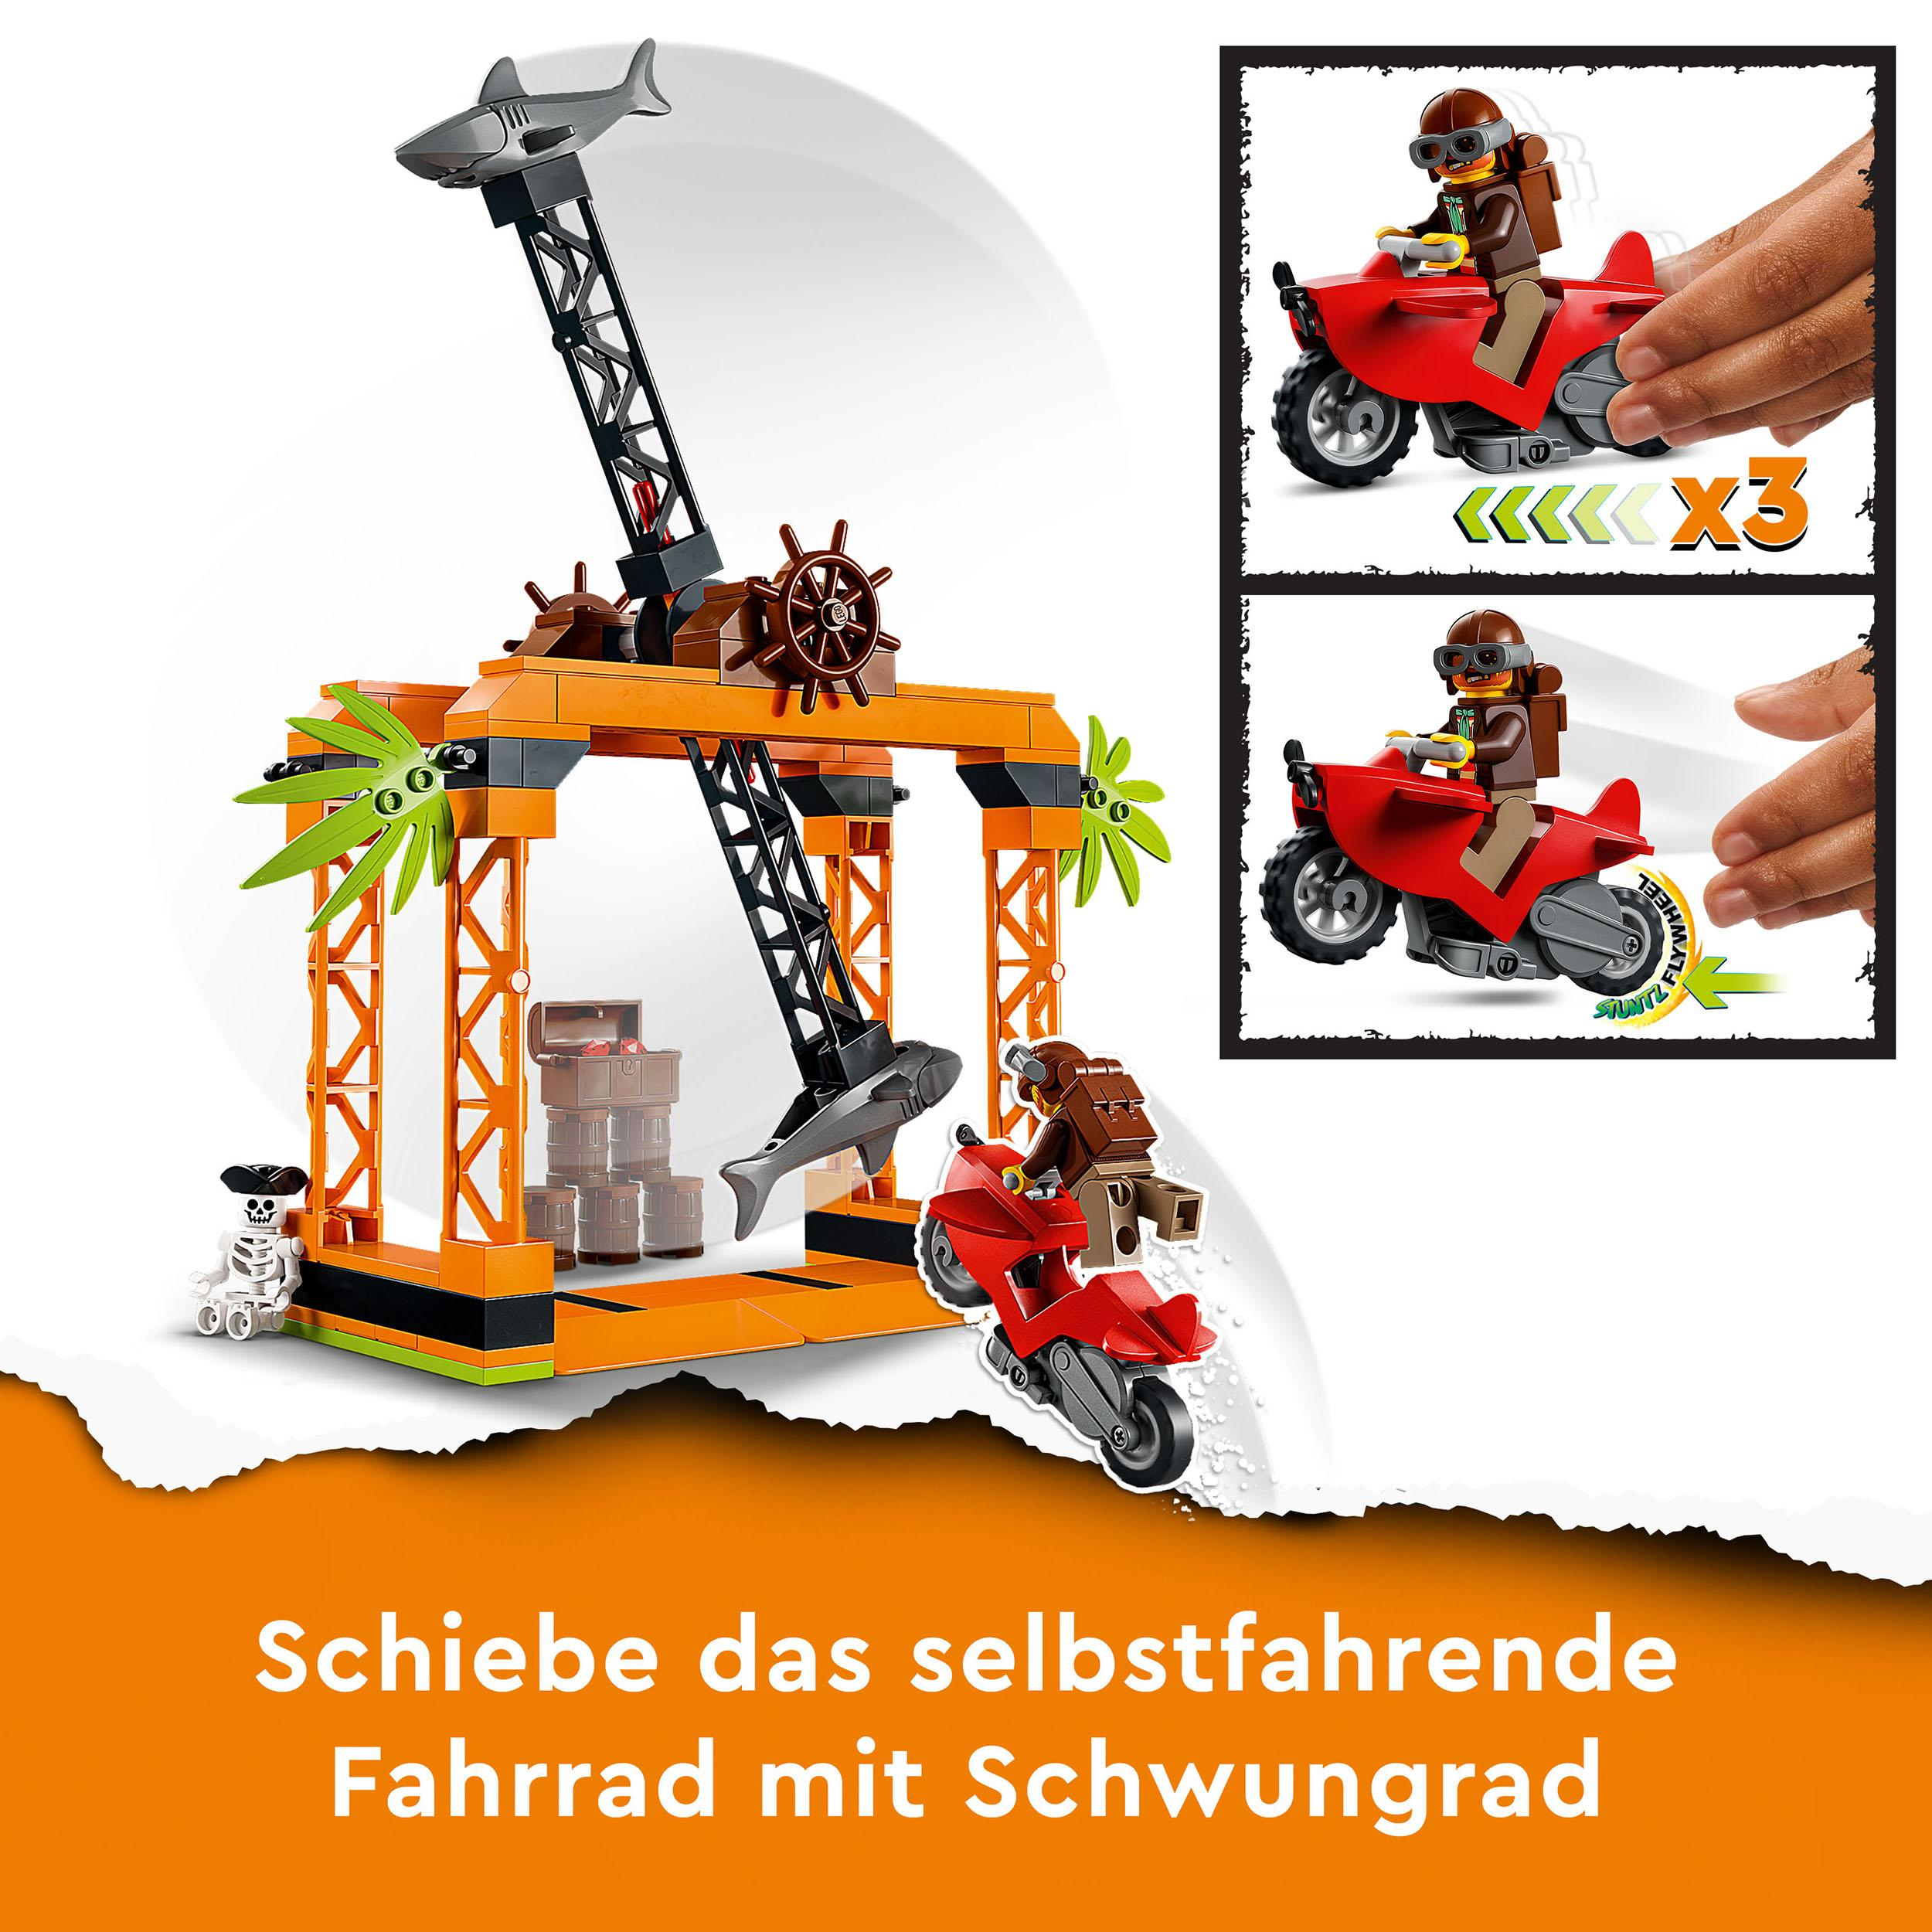 Stuntz Bausatz, City Mehrfarbig 60342 Haiangriff-Stuntchallenge LEGO